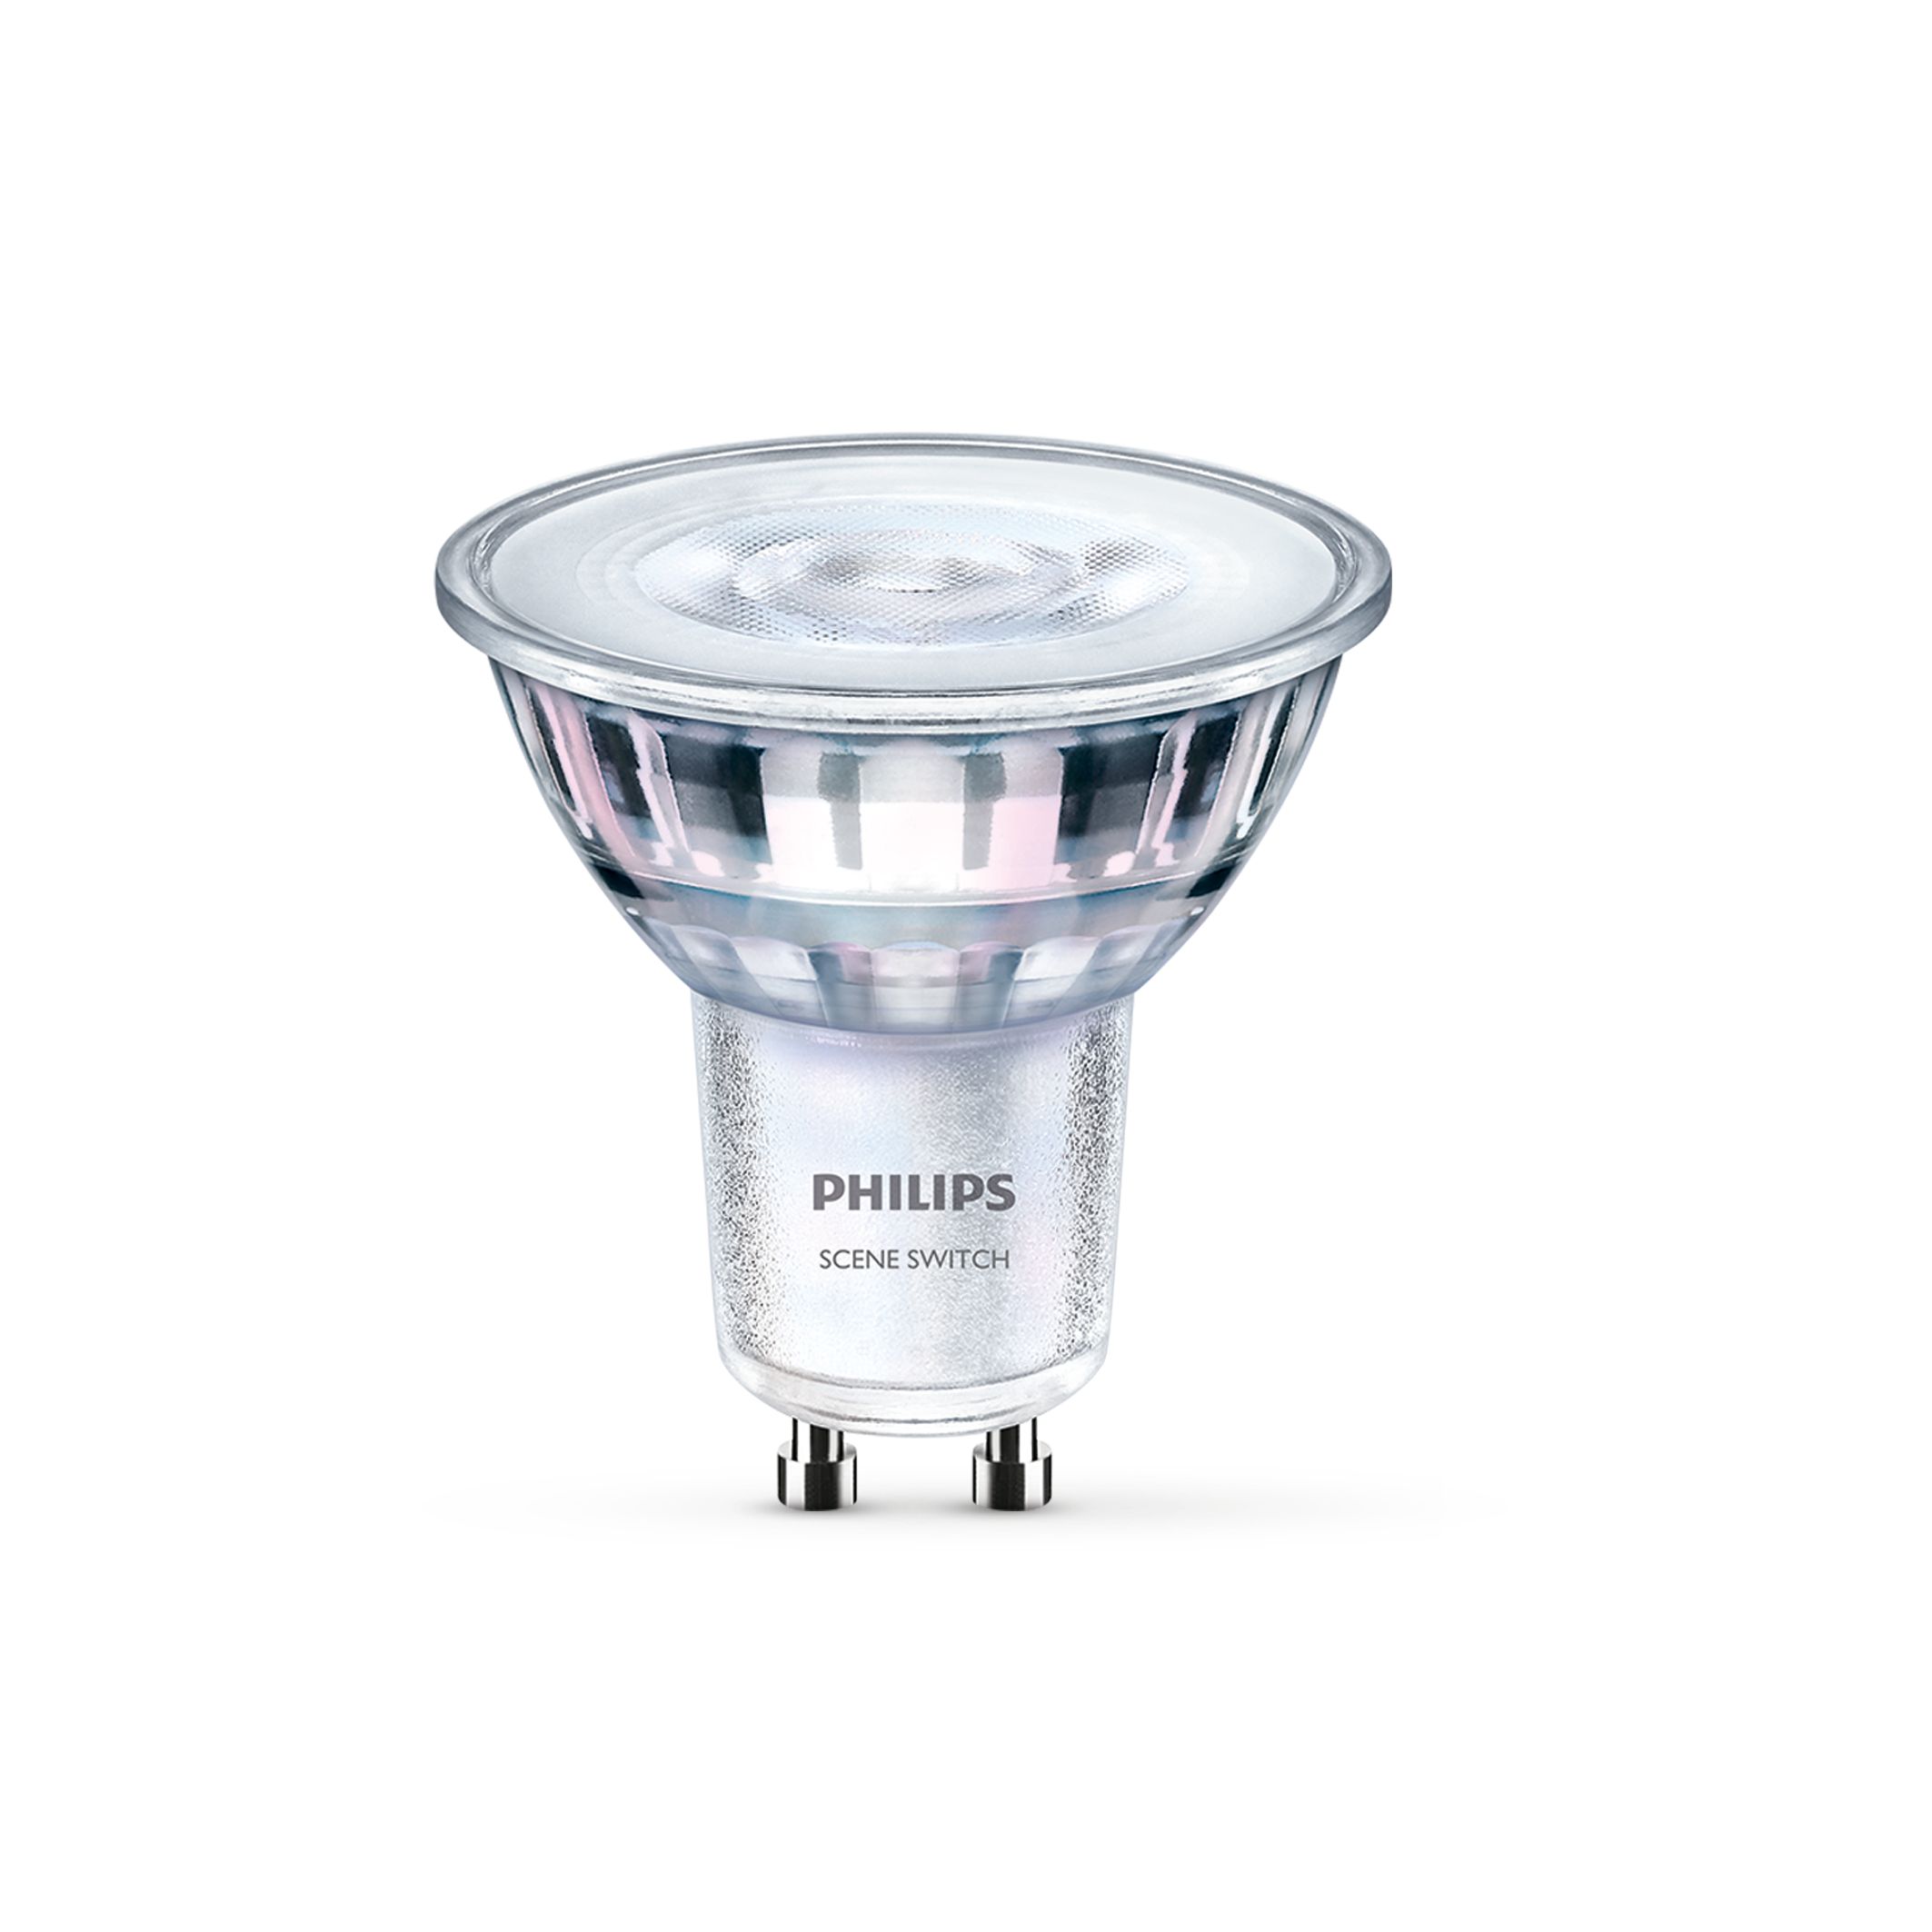 hoofdstuk roem binding SceneSwitch LEDspot | 7178651 | Philips lighting